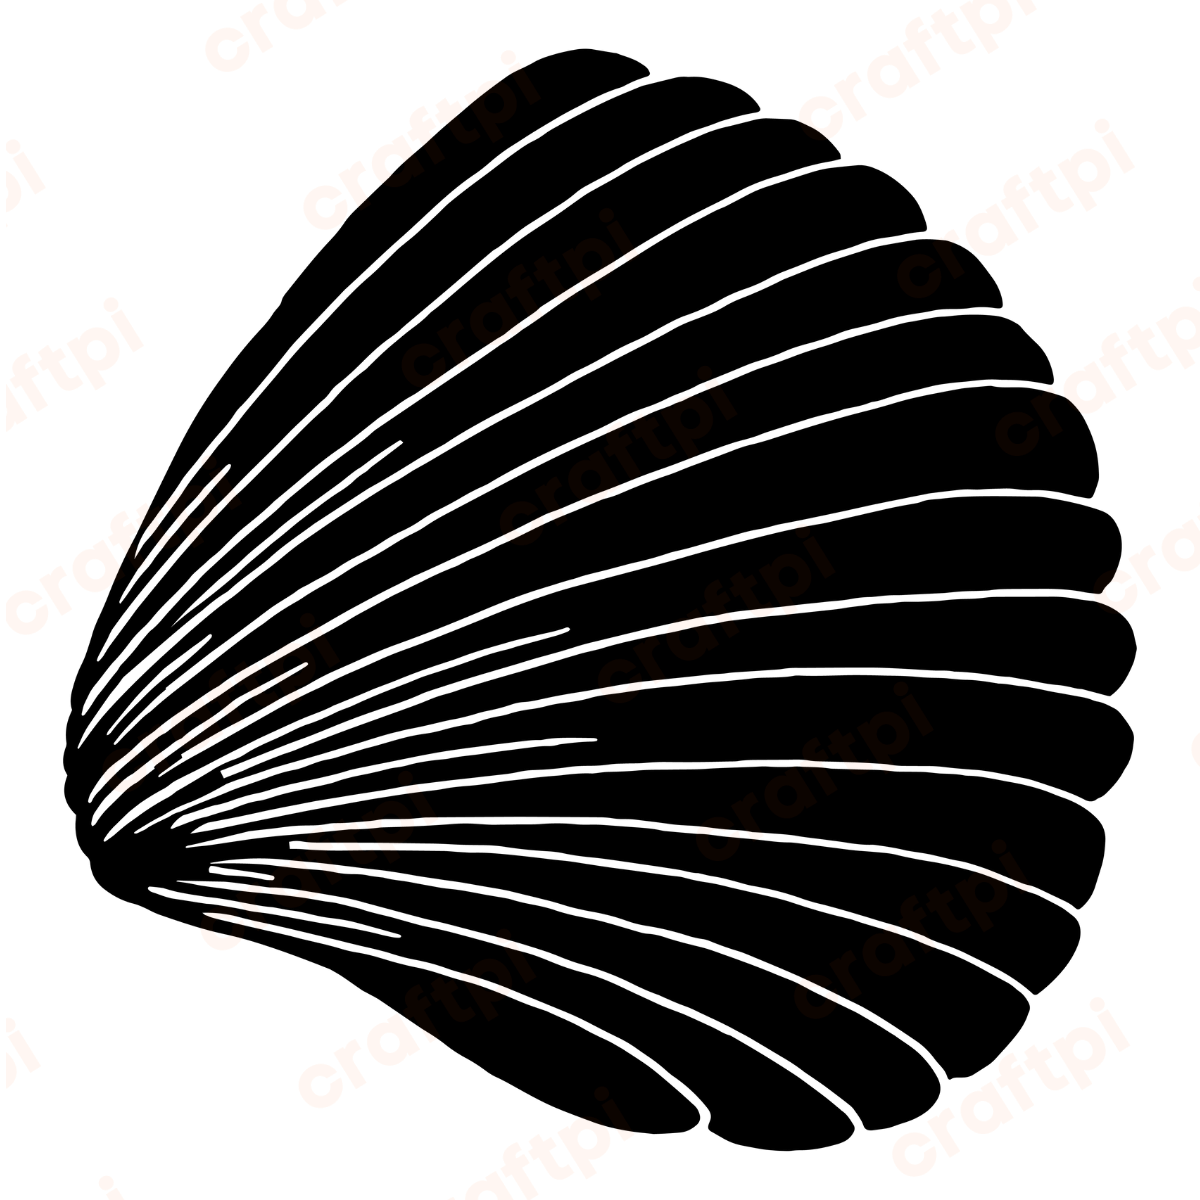 seashell vector